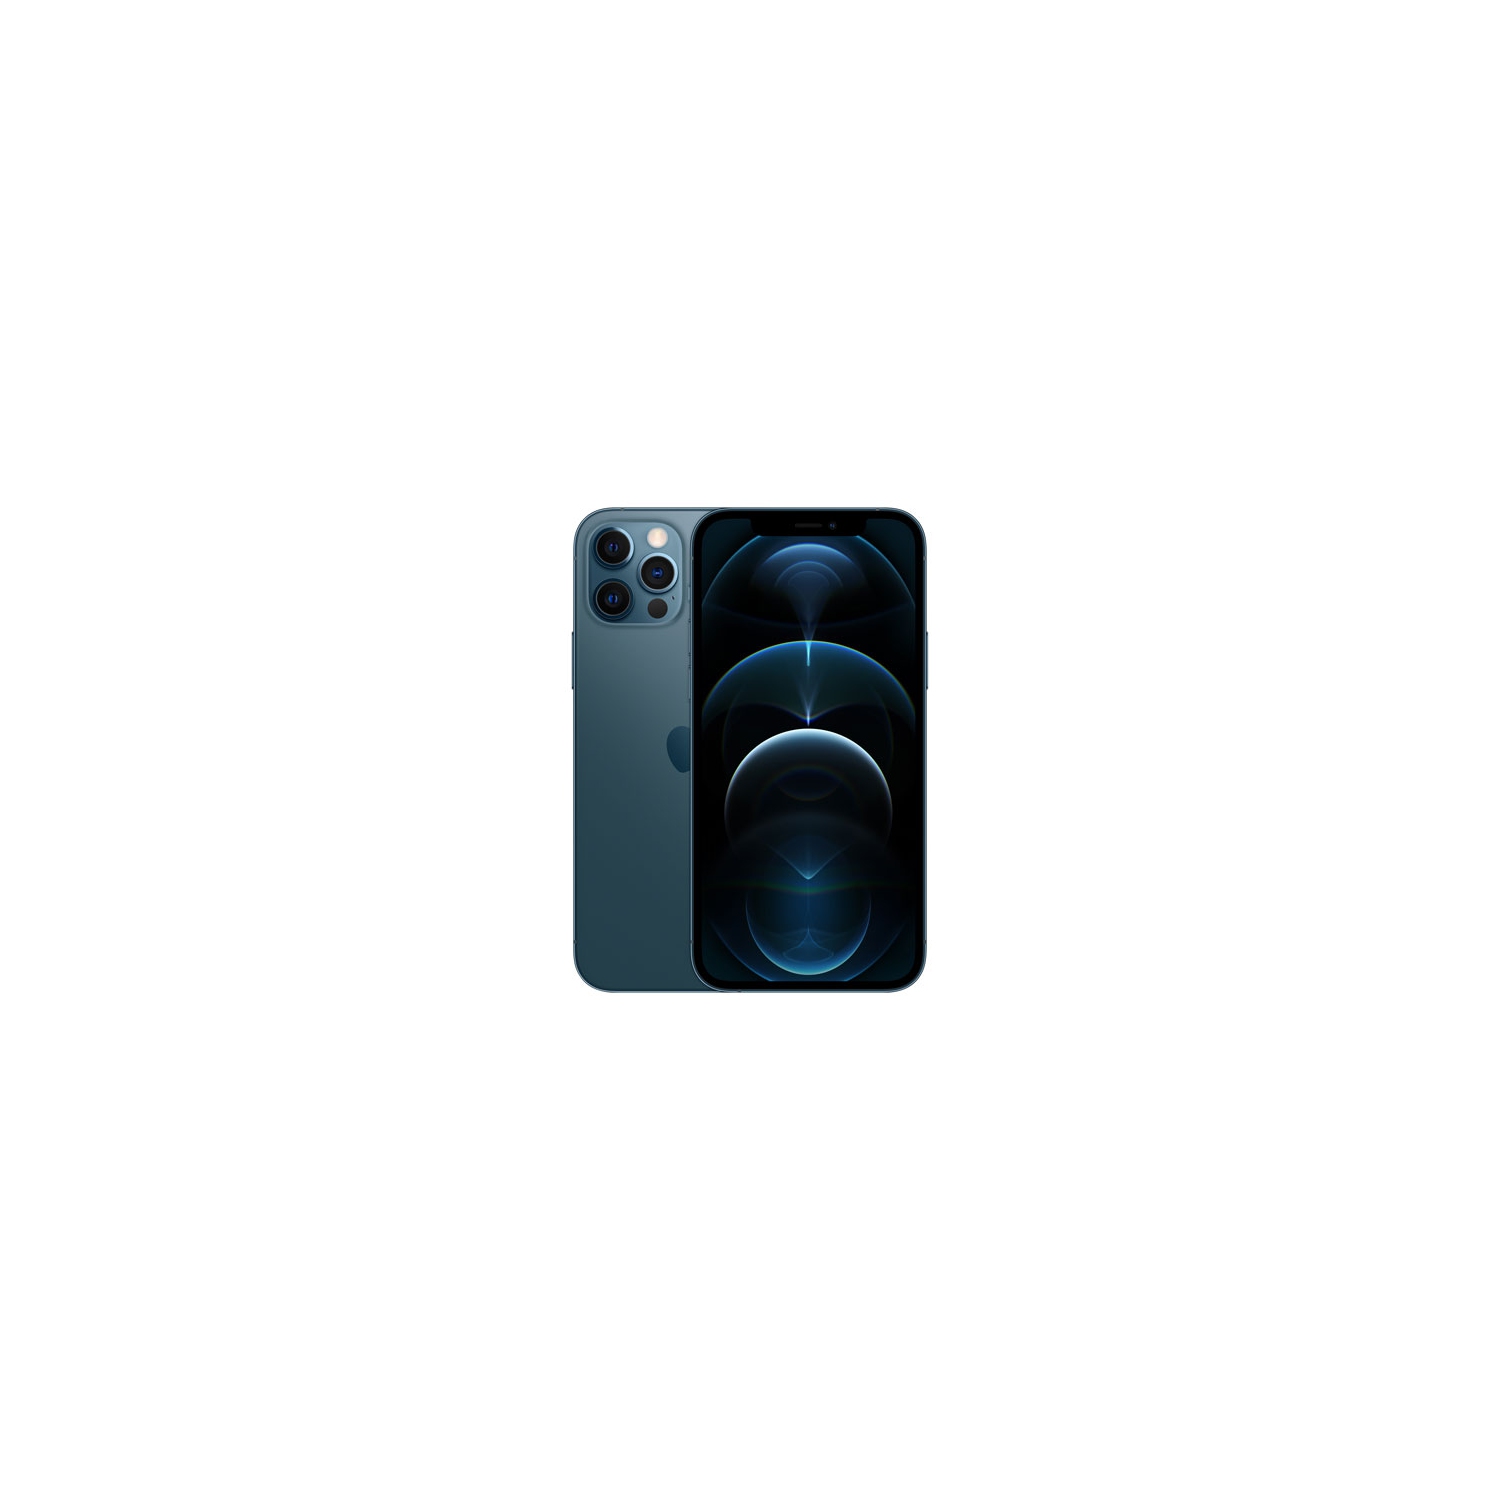 Apple iPhone 12 Pro 256GB Smartphone - Pacific Blue - Unlocked - Open Box